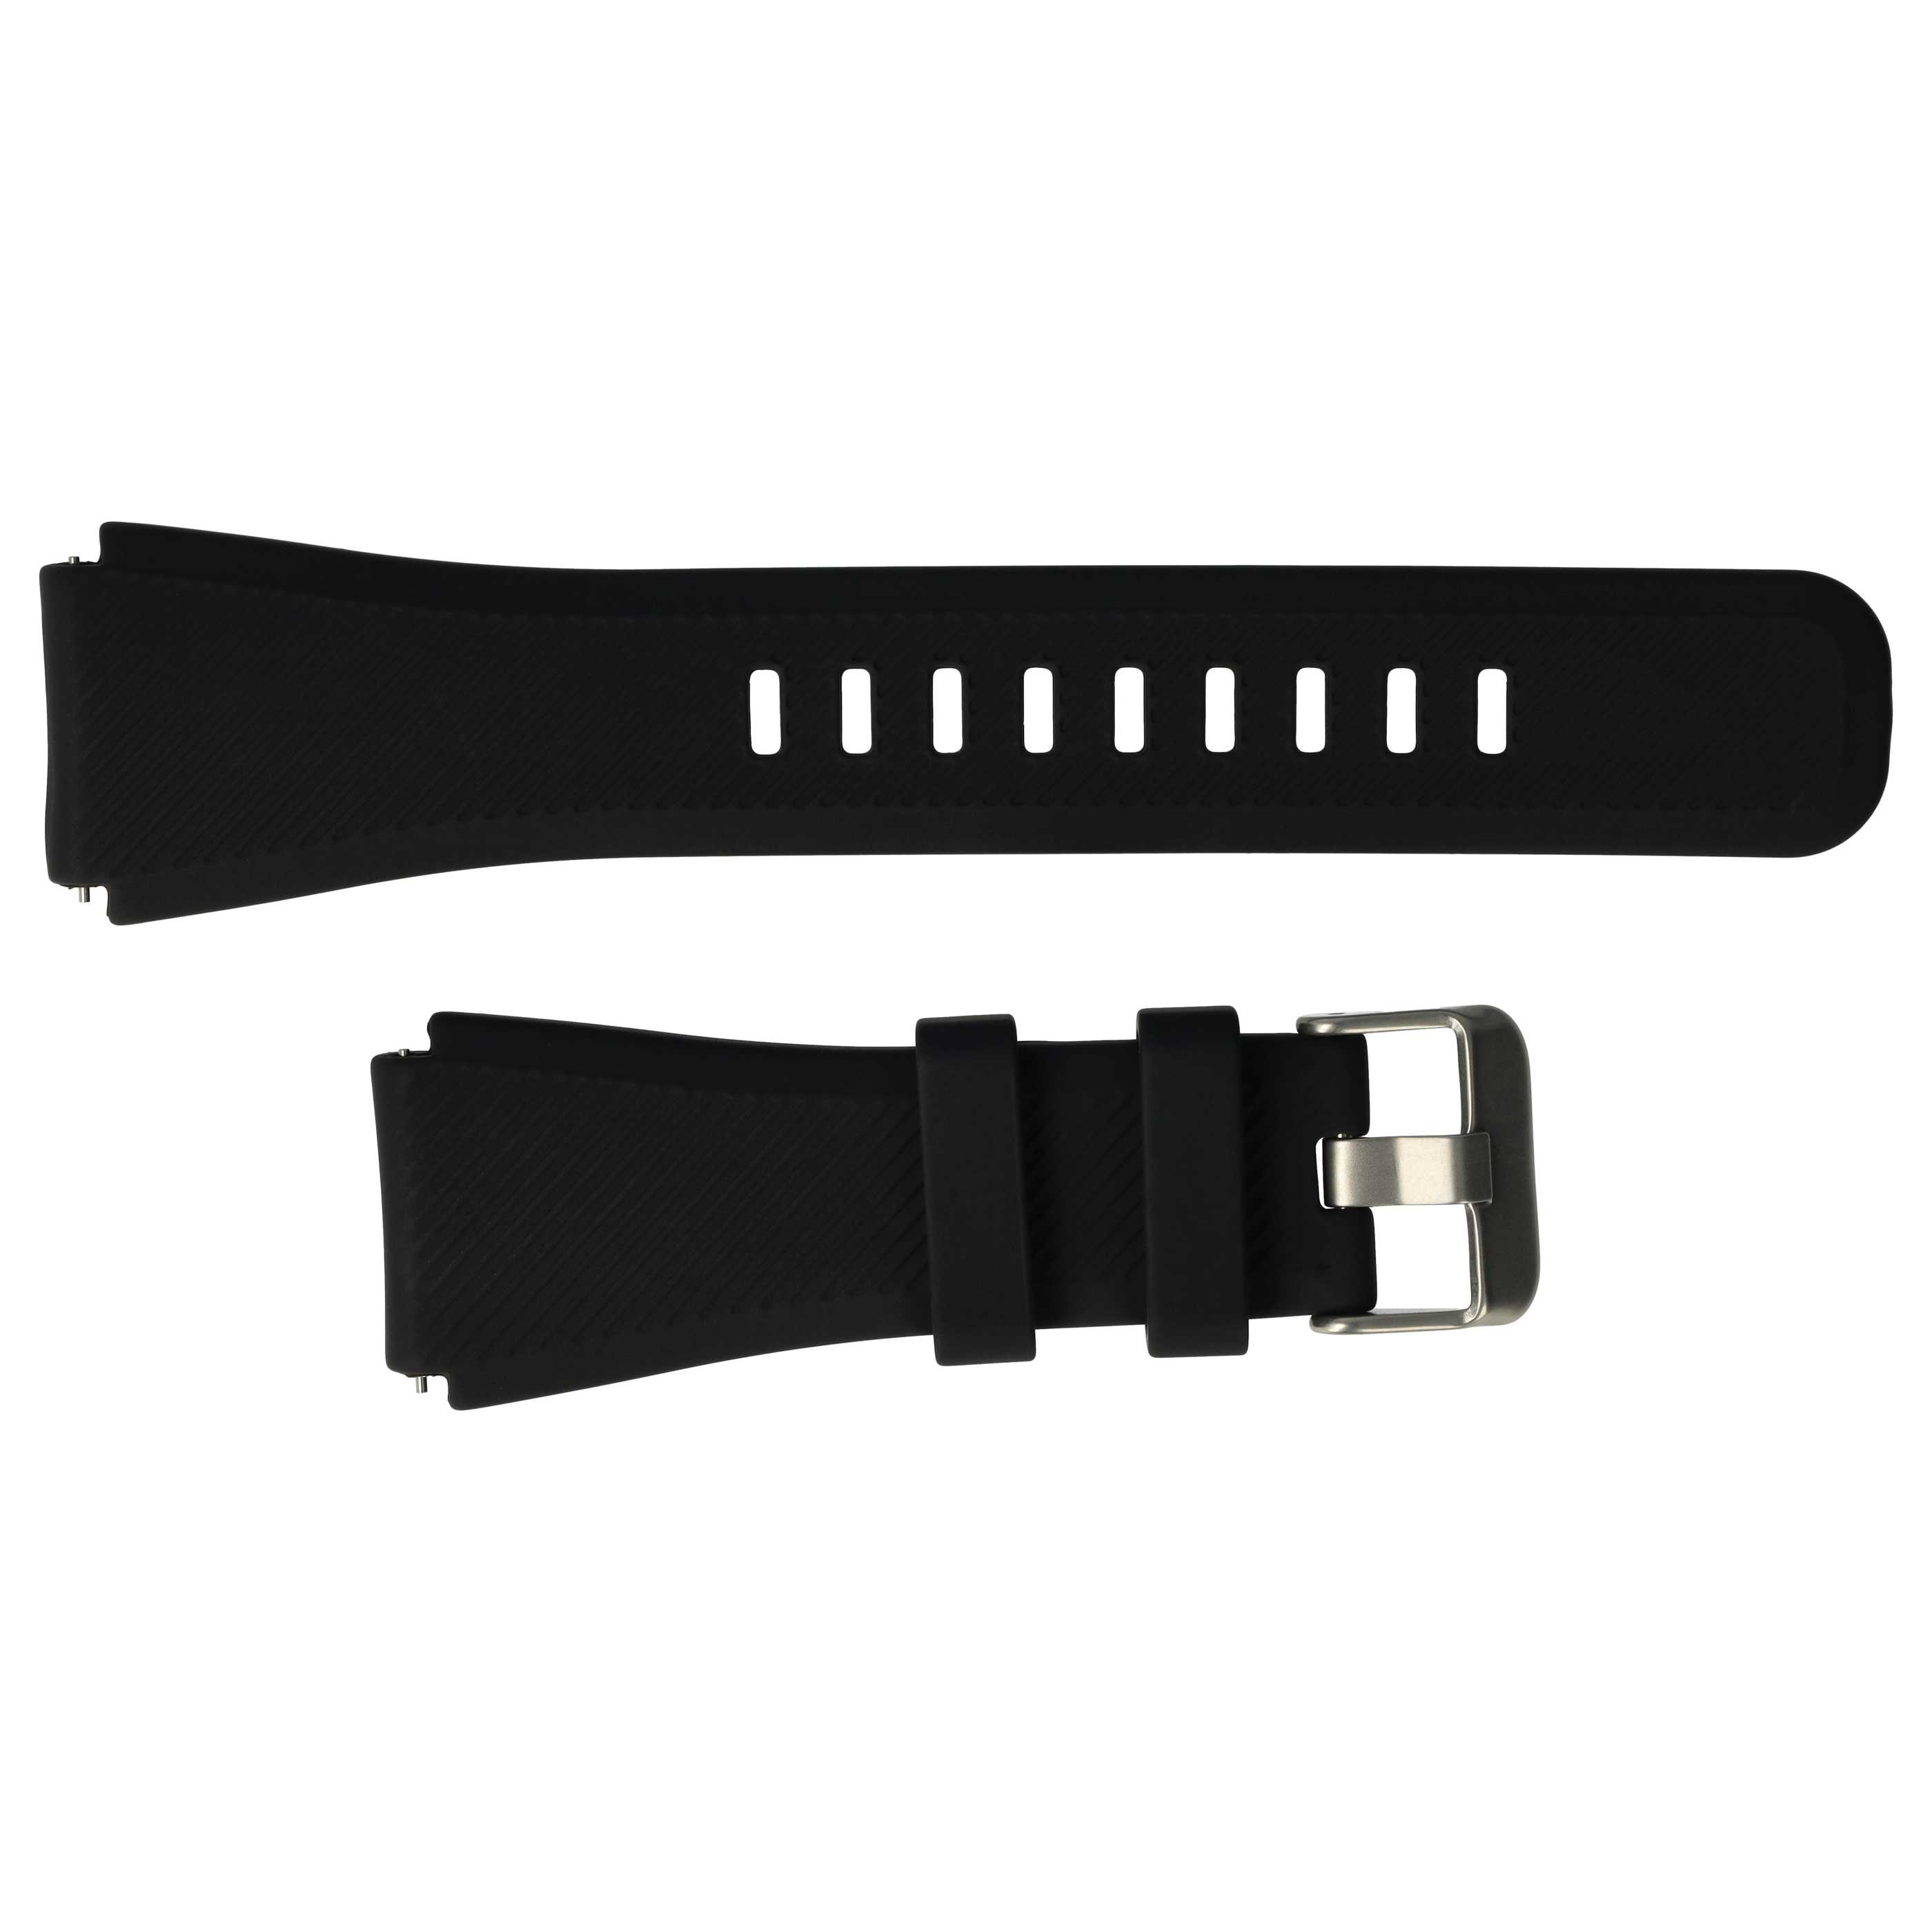 wristband for Samsung Gear Smartwatch - 13cm + 8.3 cm long, silicone, black